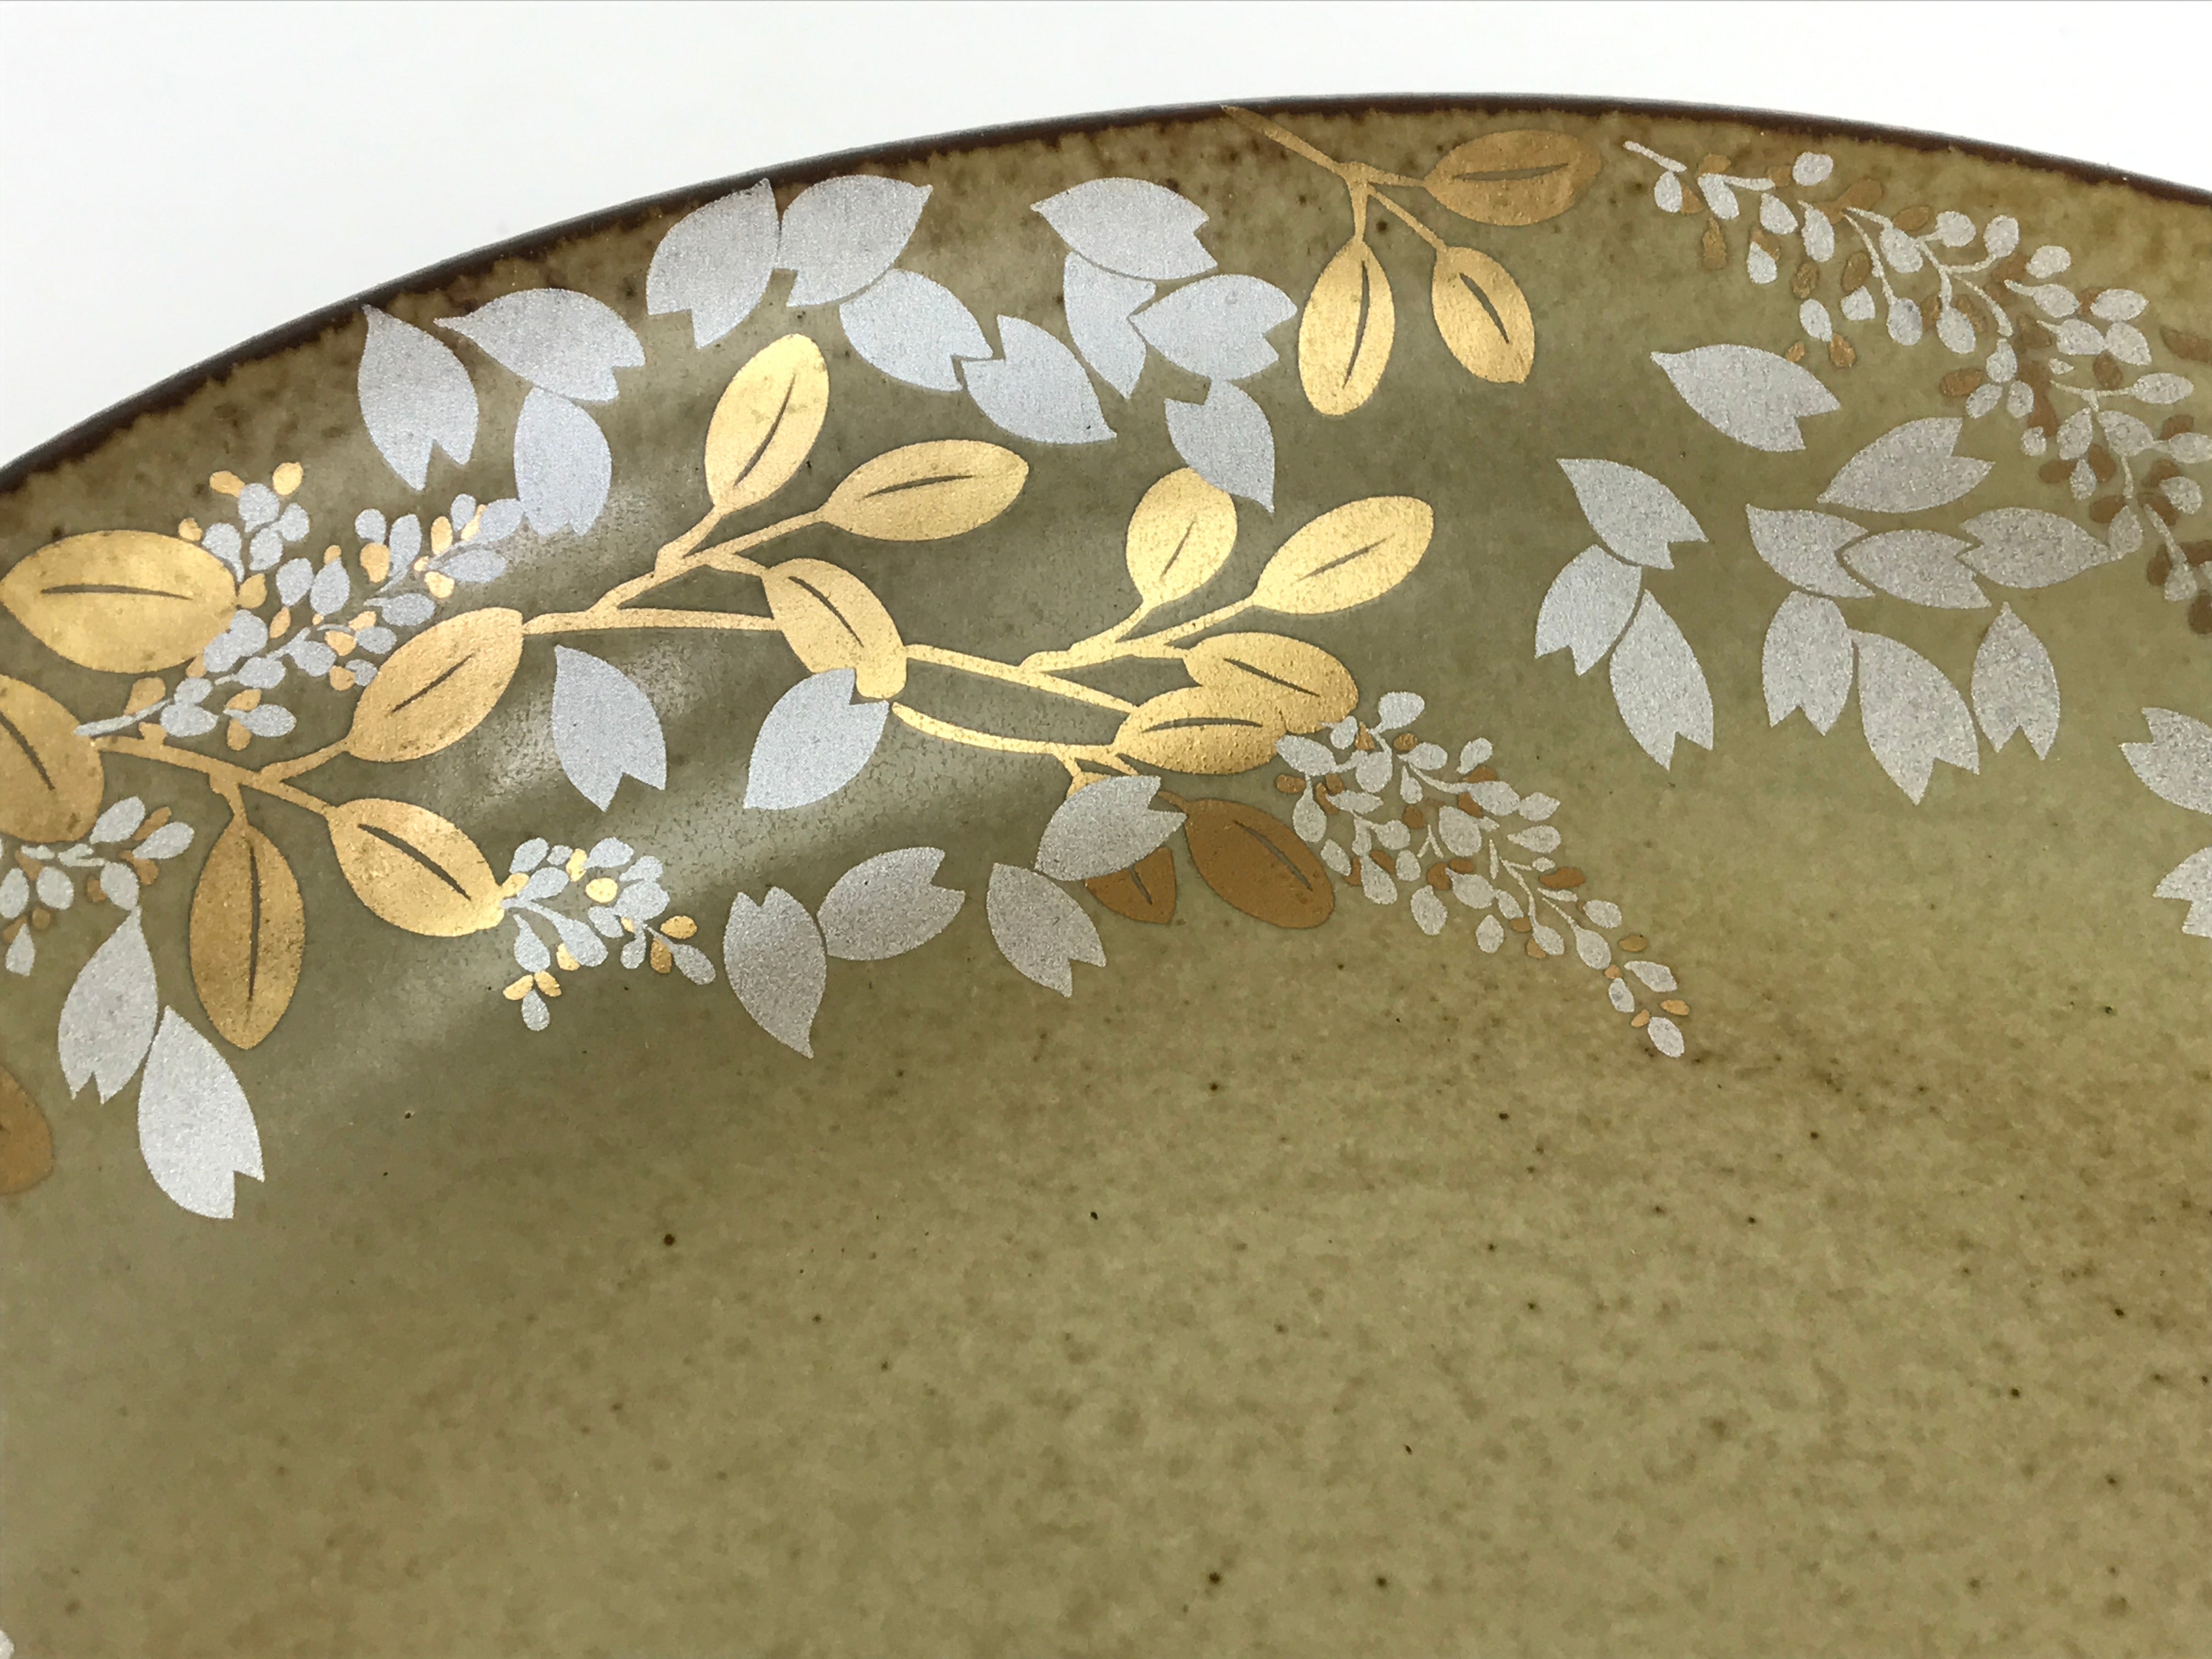 Japanese Ceramic Soup Bowl Vtg Deep Plate Silver Gold Flower 